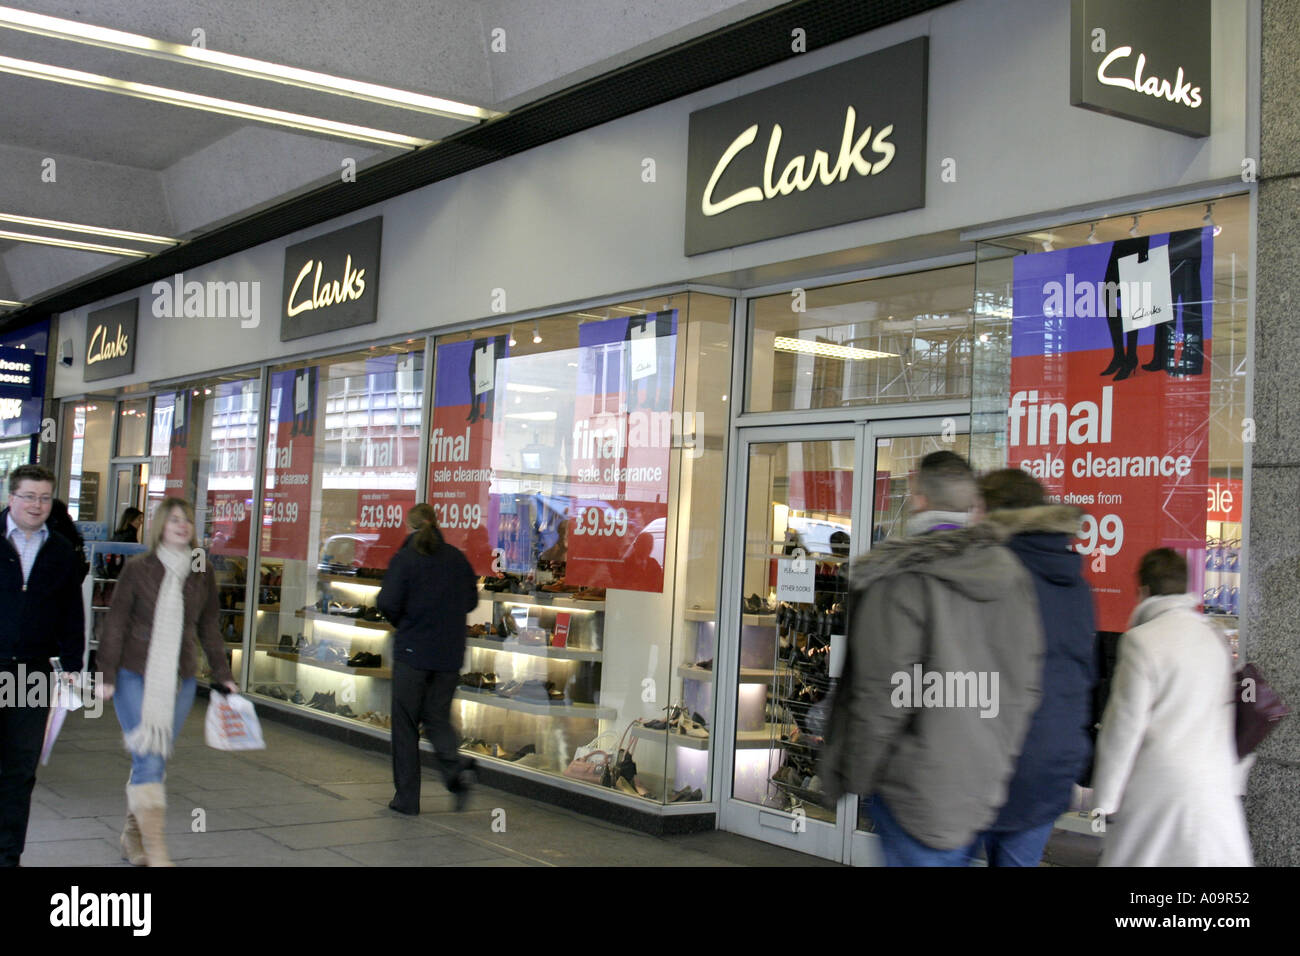 Clarks Shoes Shop Victoria Street London UK Feb 05 Stock Photo - Alamy